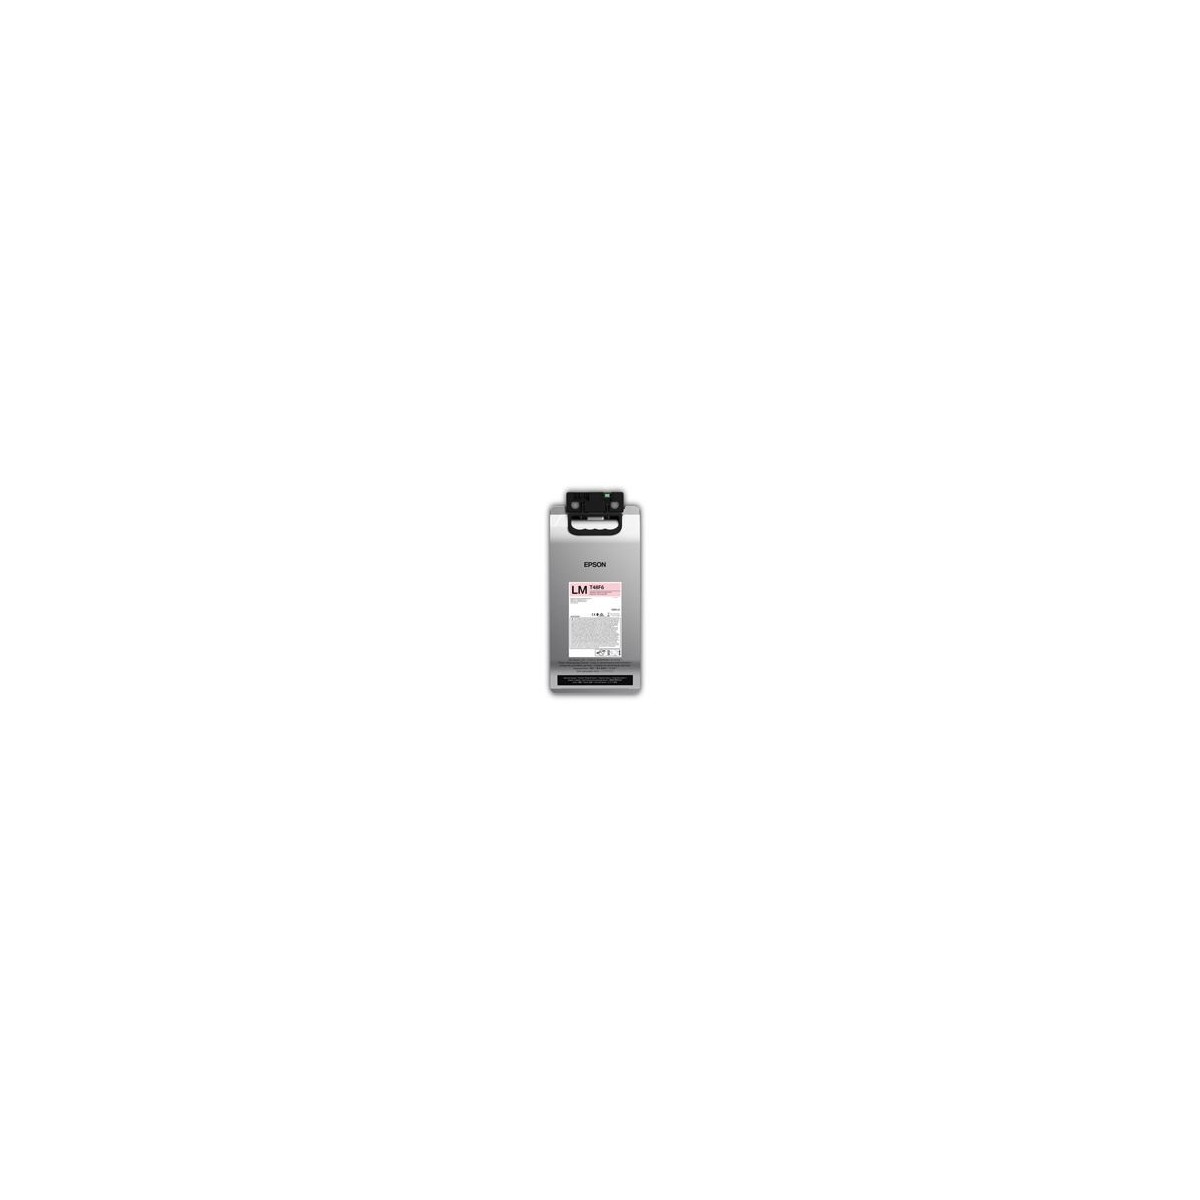 Epson UltraChrome RS - Original - Light magenta - Epson - Single pack - SureColor R5000 - 64 RESIN - 1 pc(s)